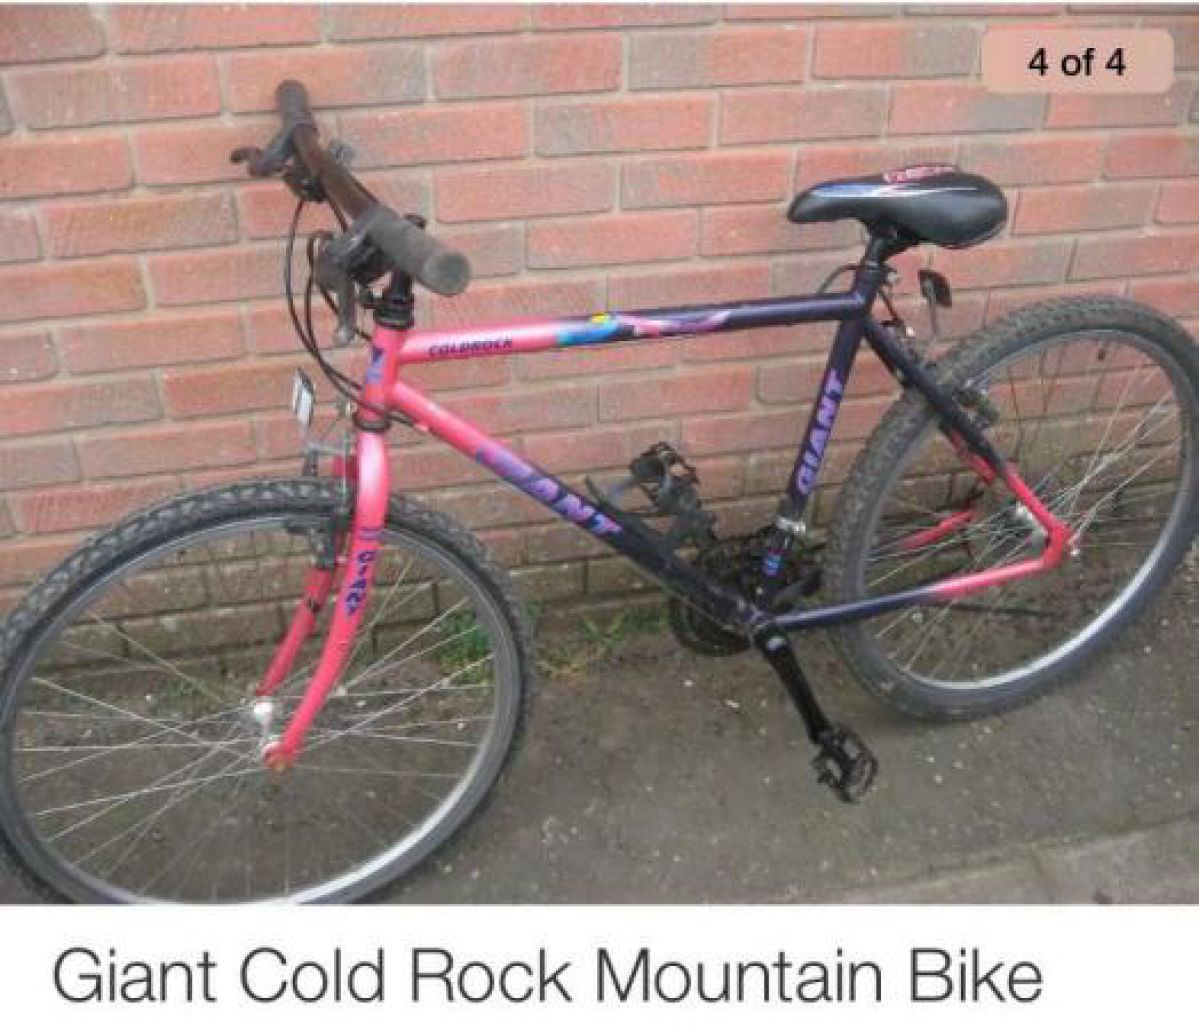 Giant cold rock mountain bike